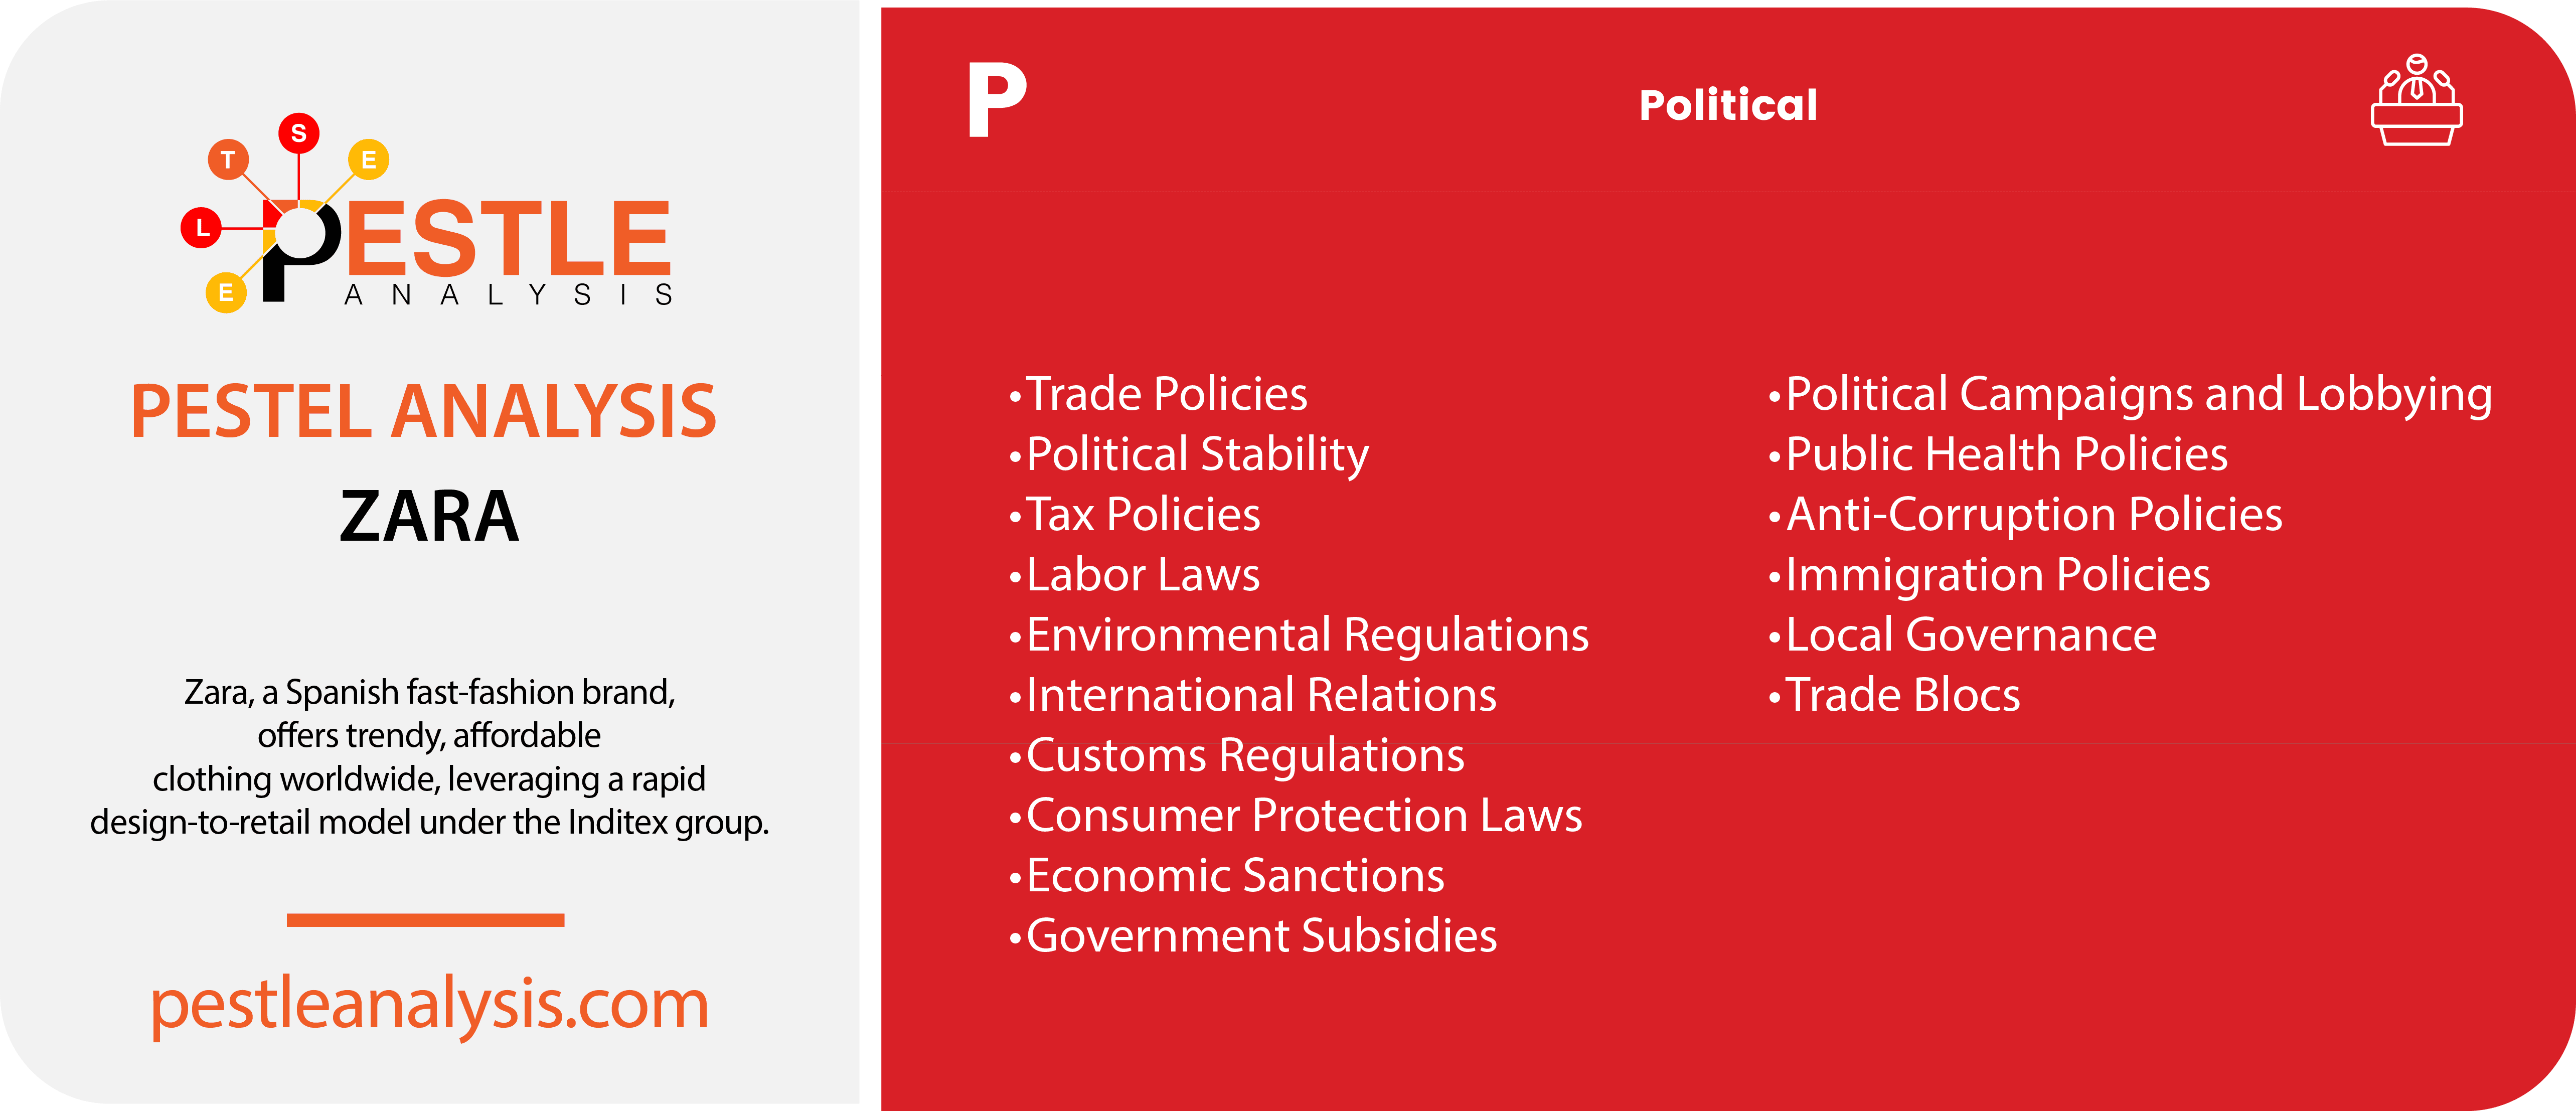 zara-pestle-analysis-political-factors-template